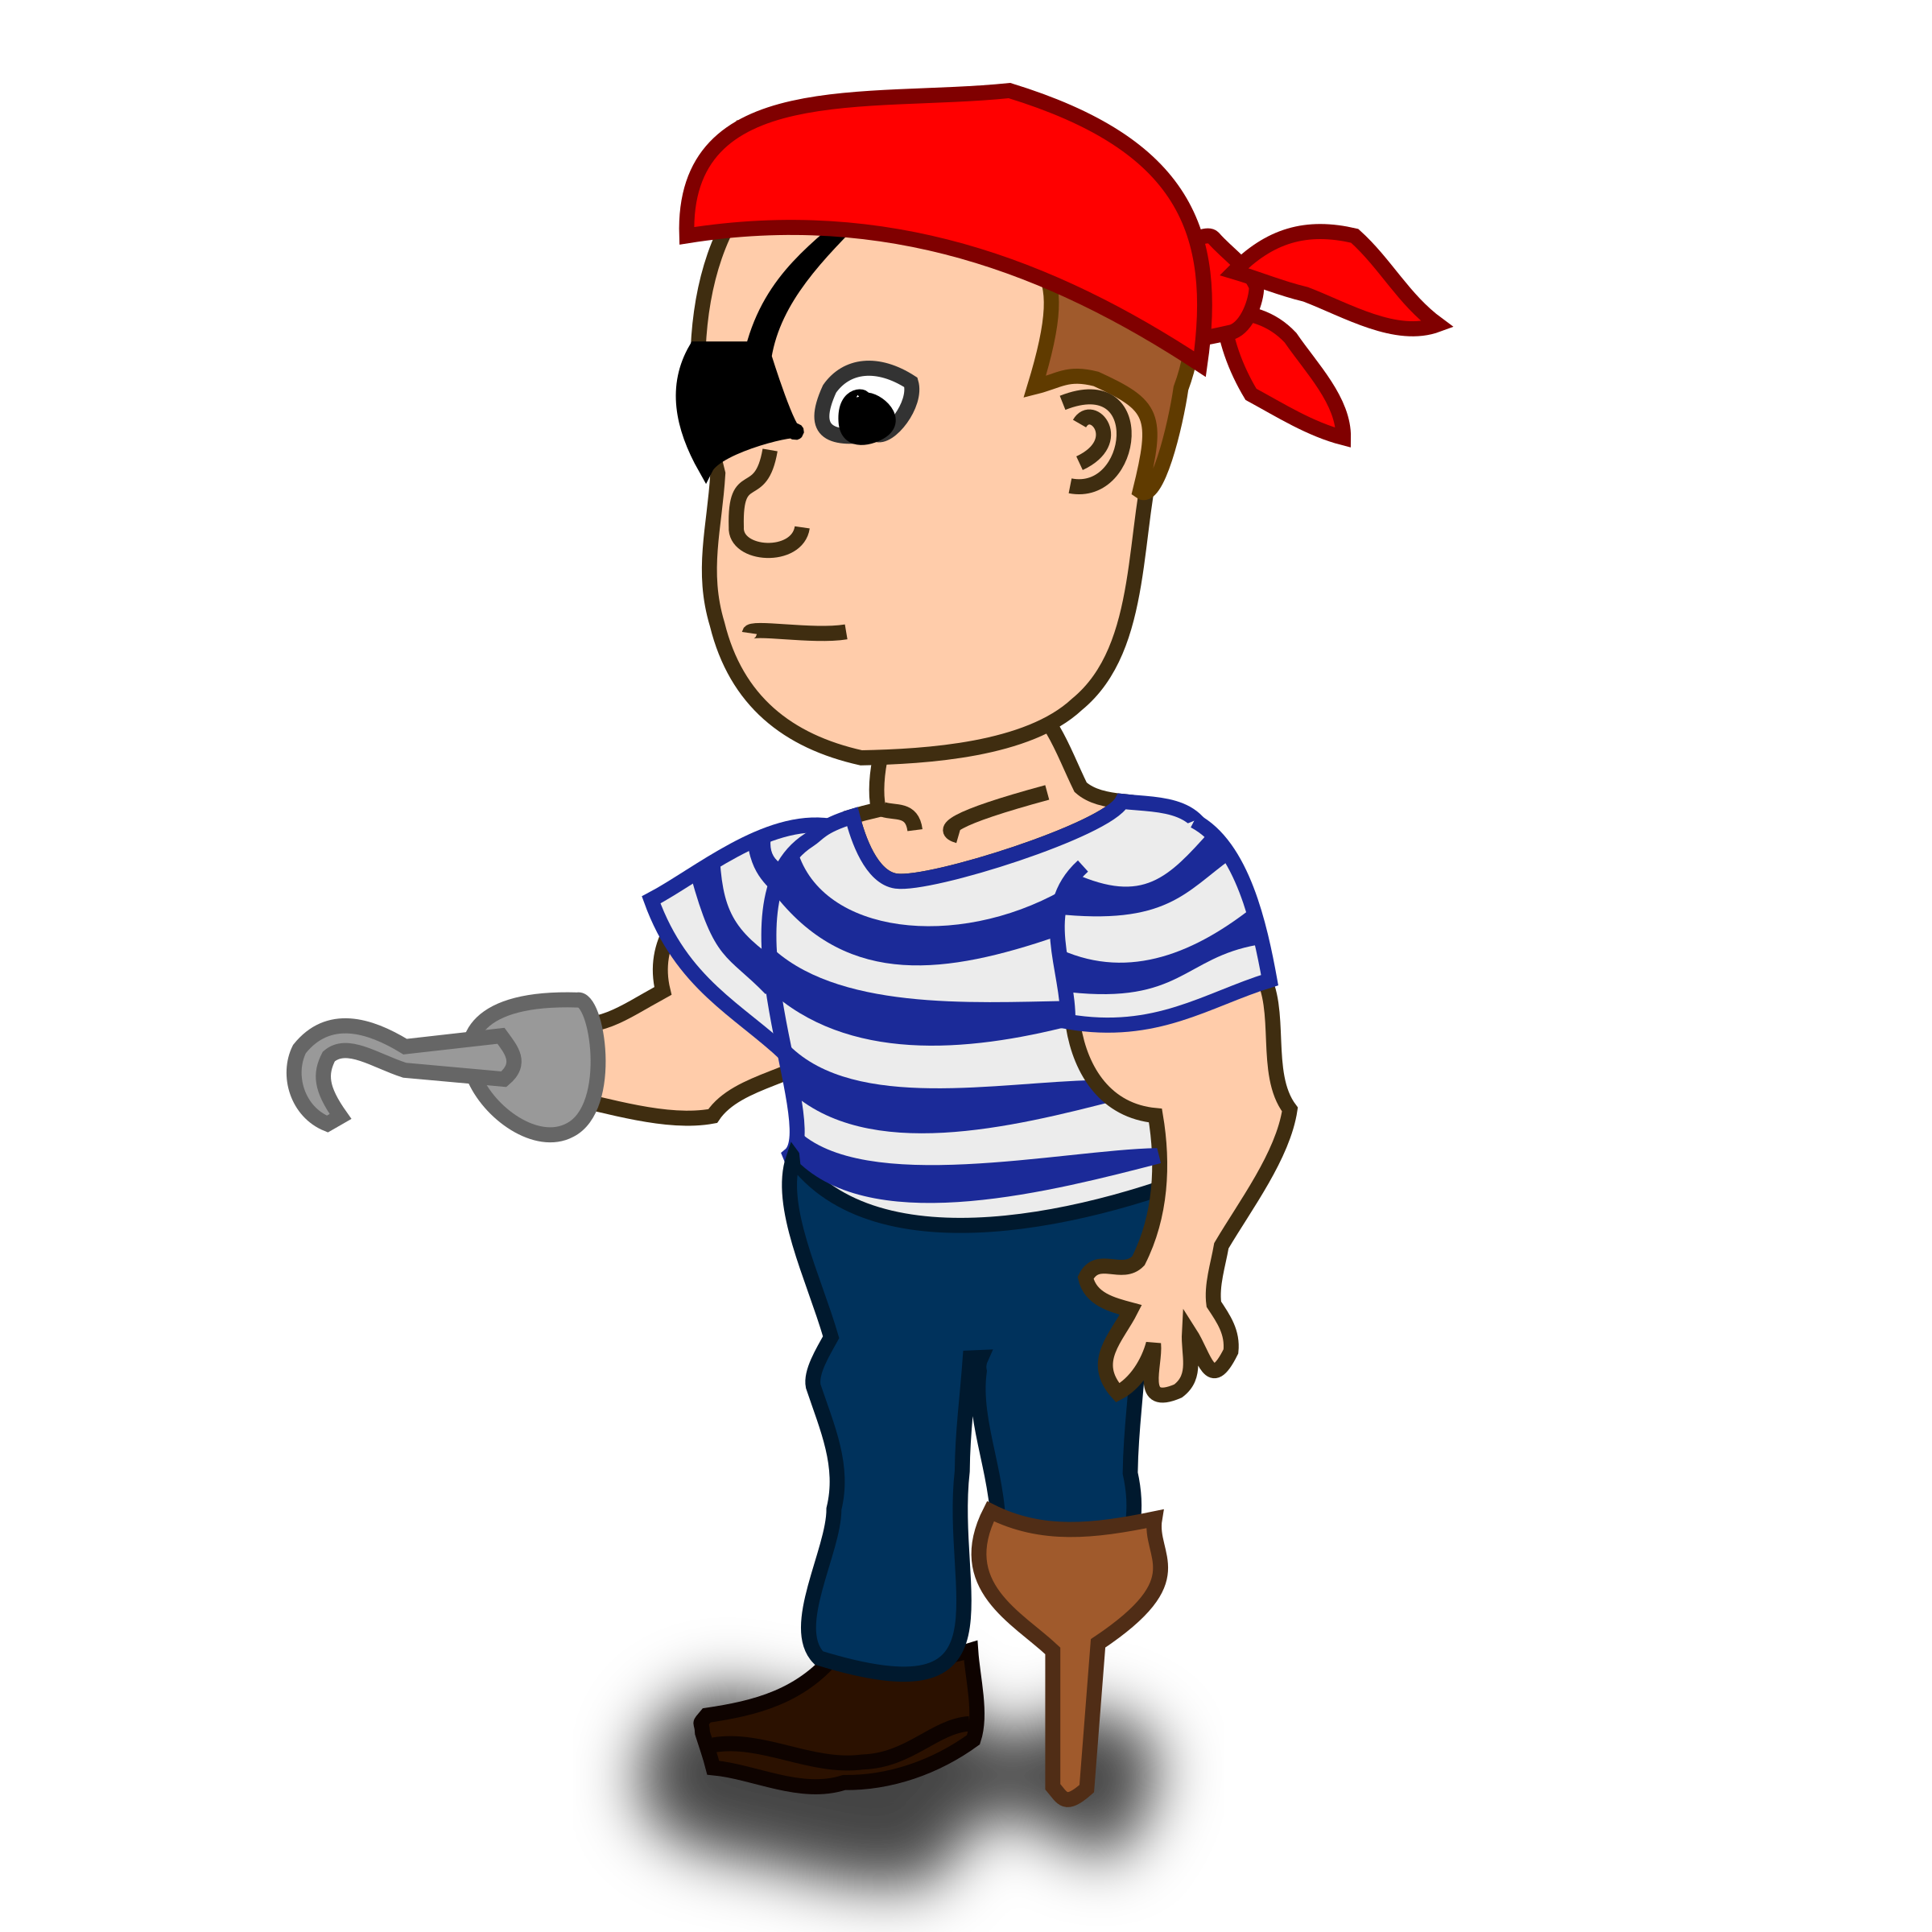 Pirates character